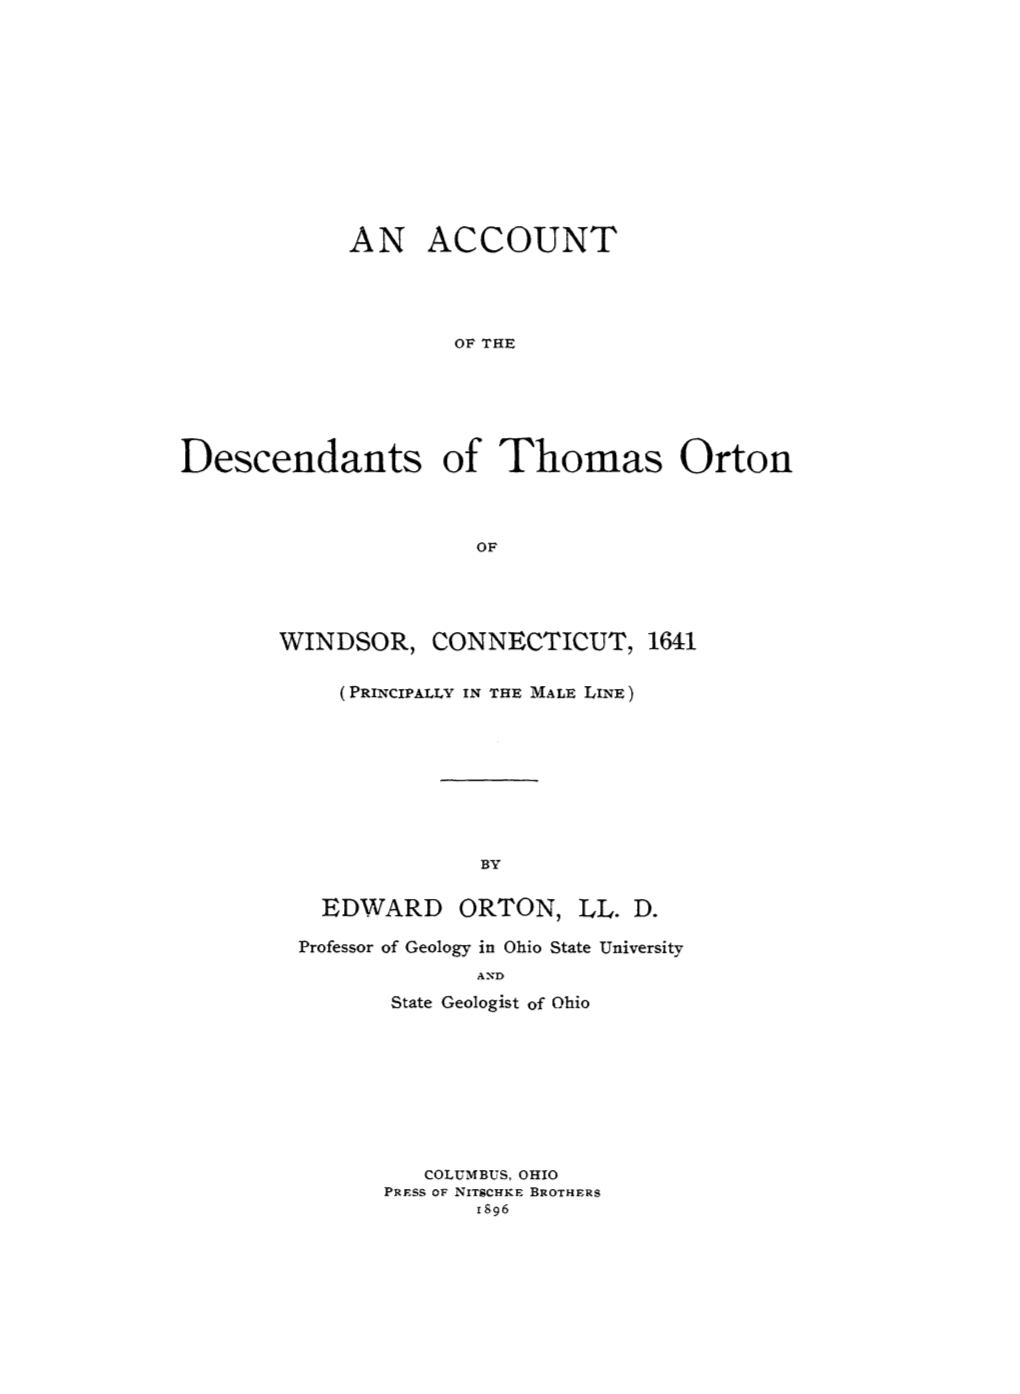 Descendants of Thomas Orton